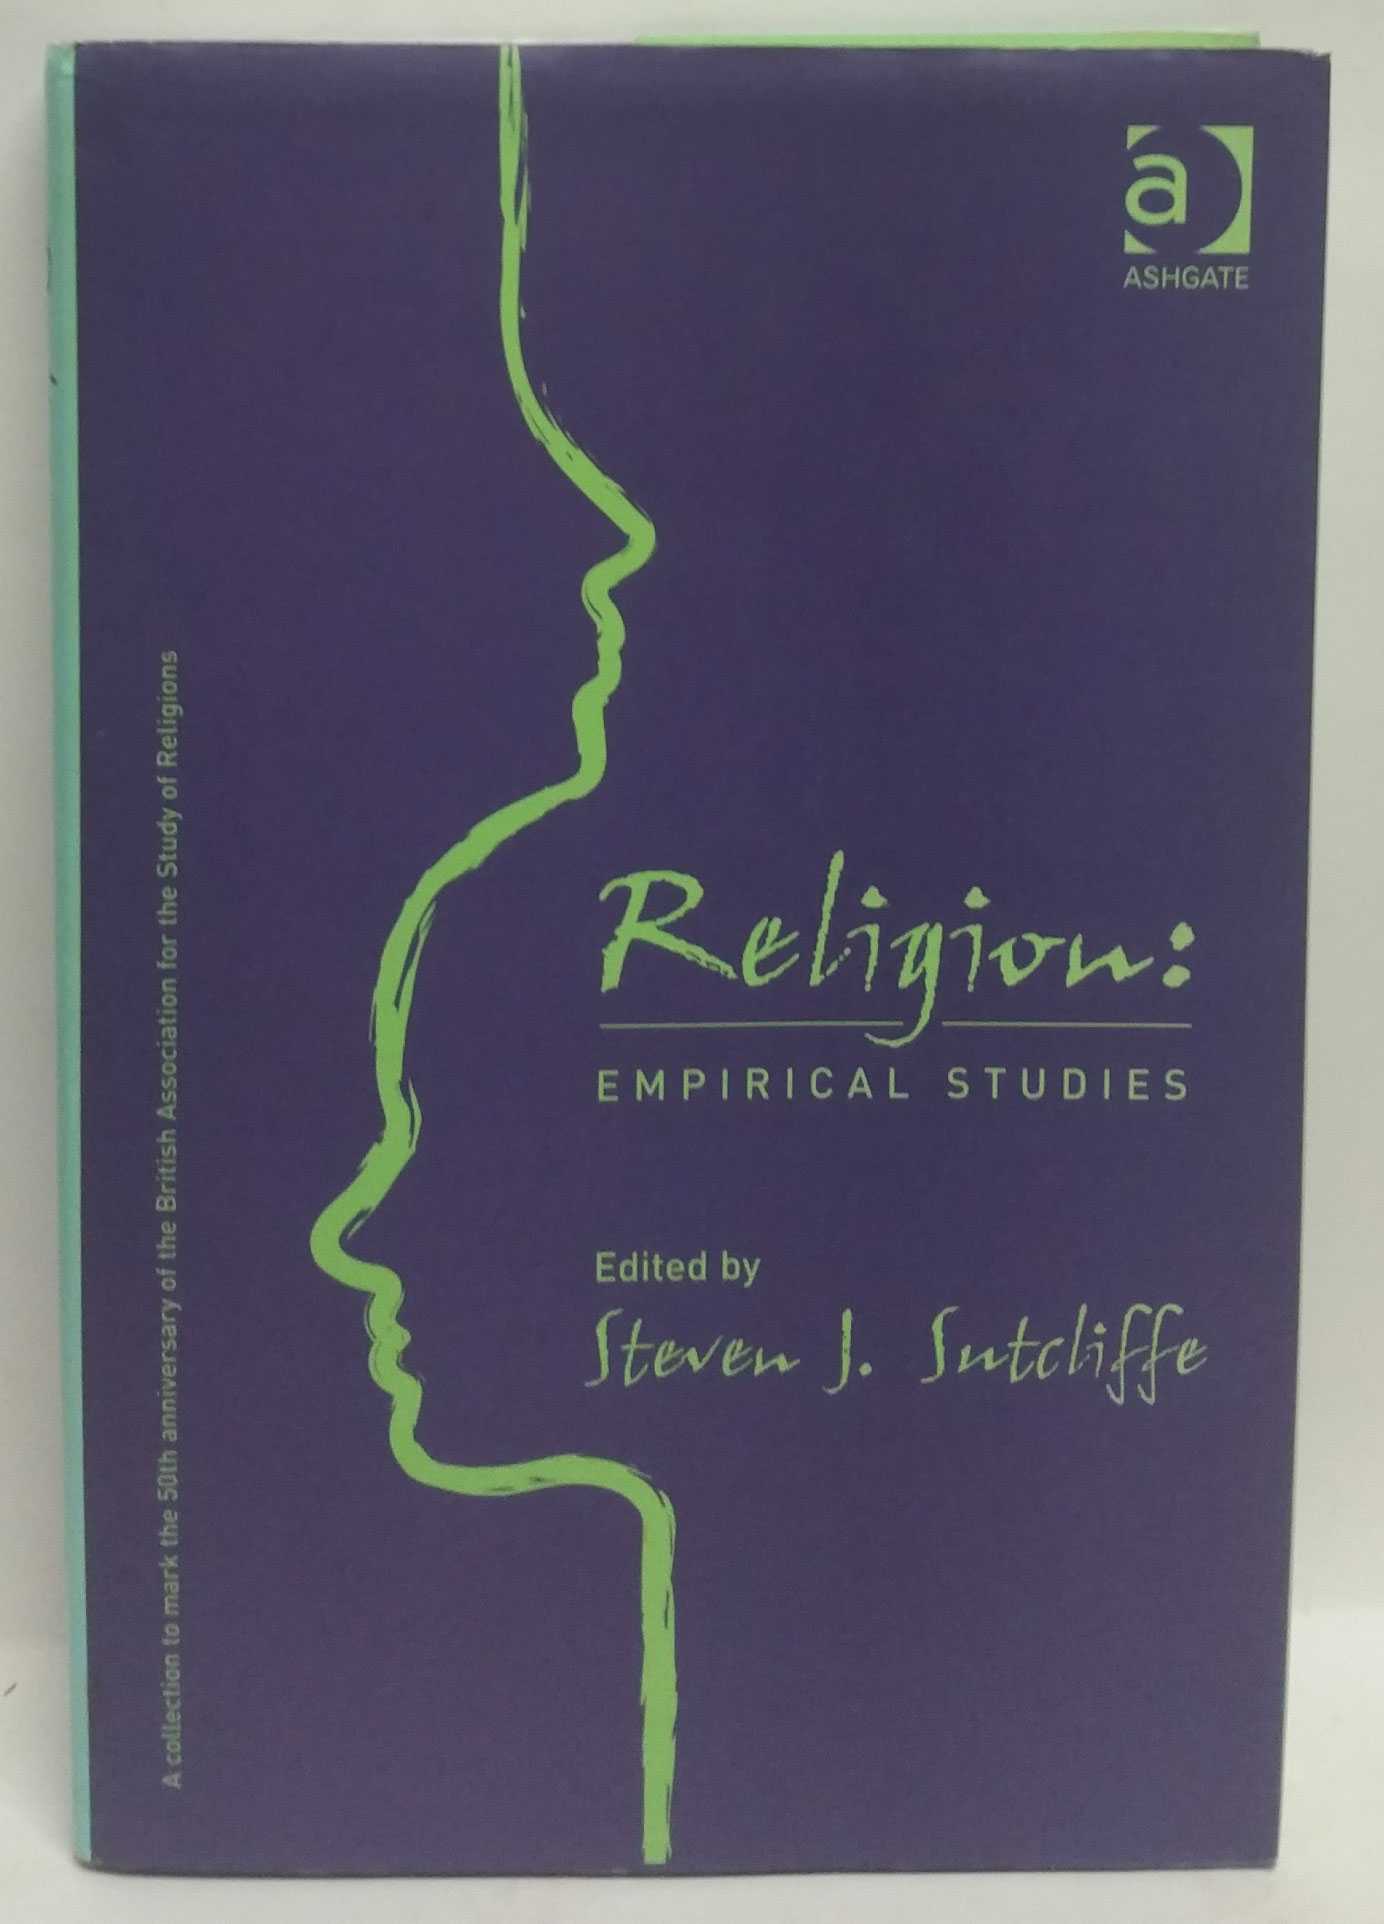 Steven J. Sutcliffe - Religion: Empirical Studies